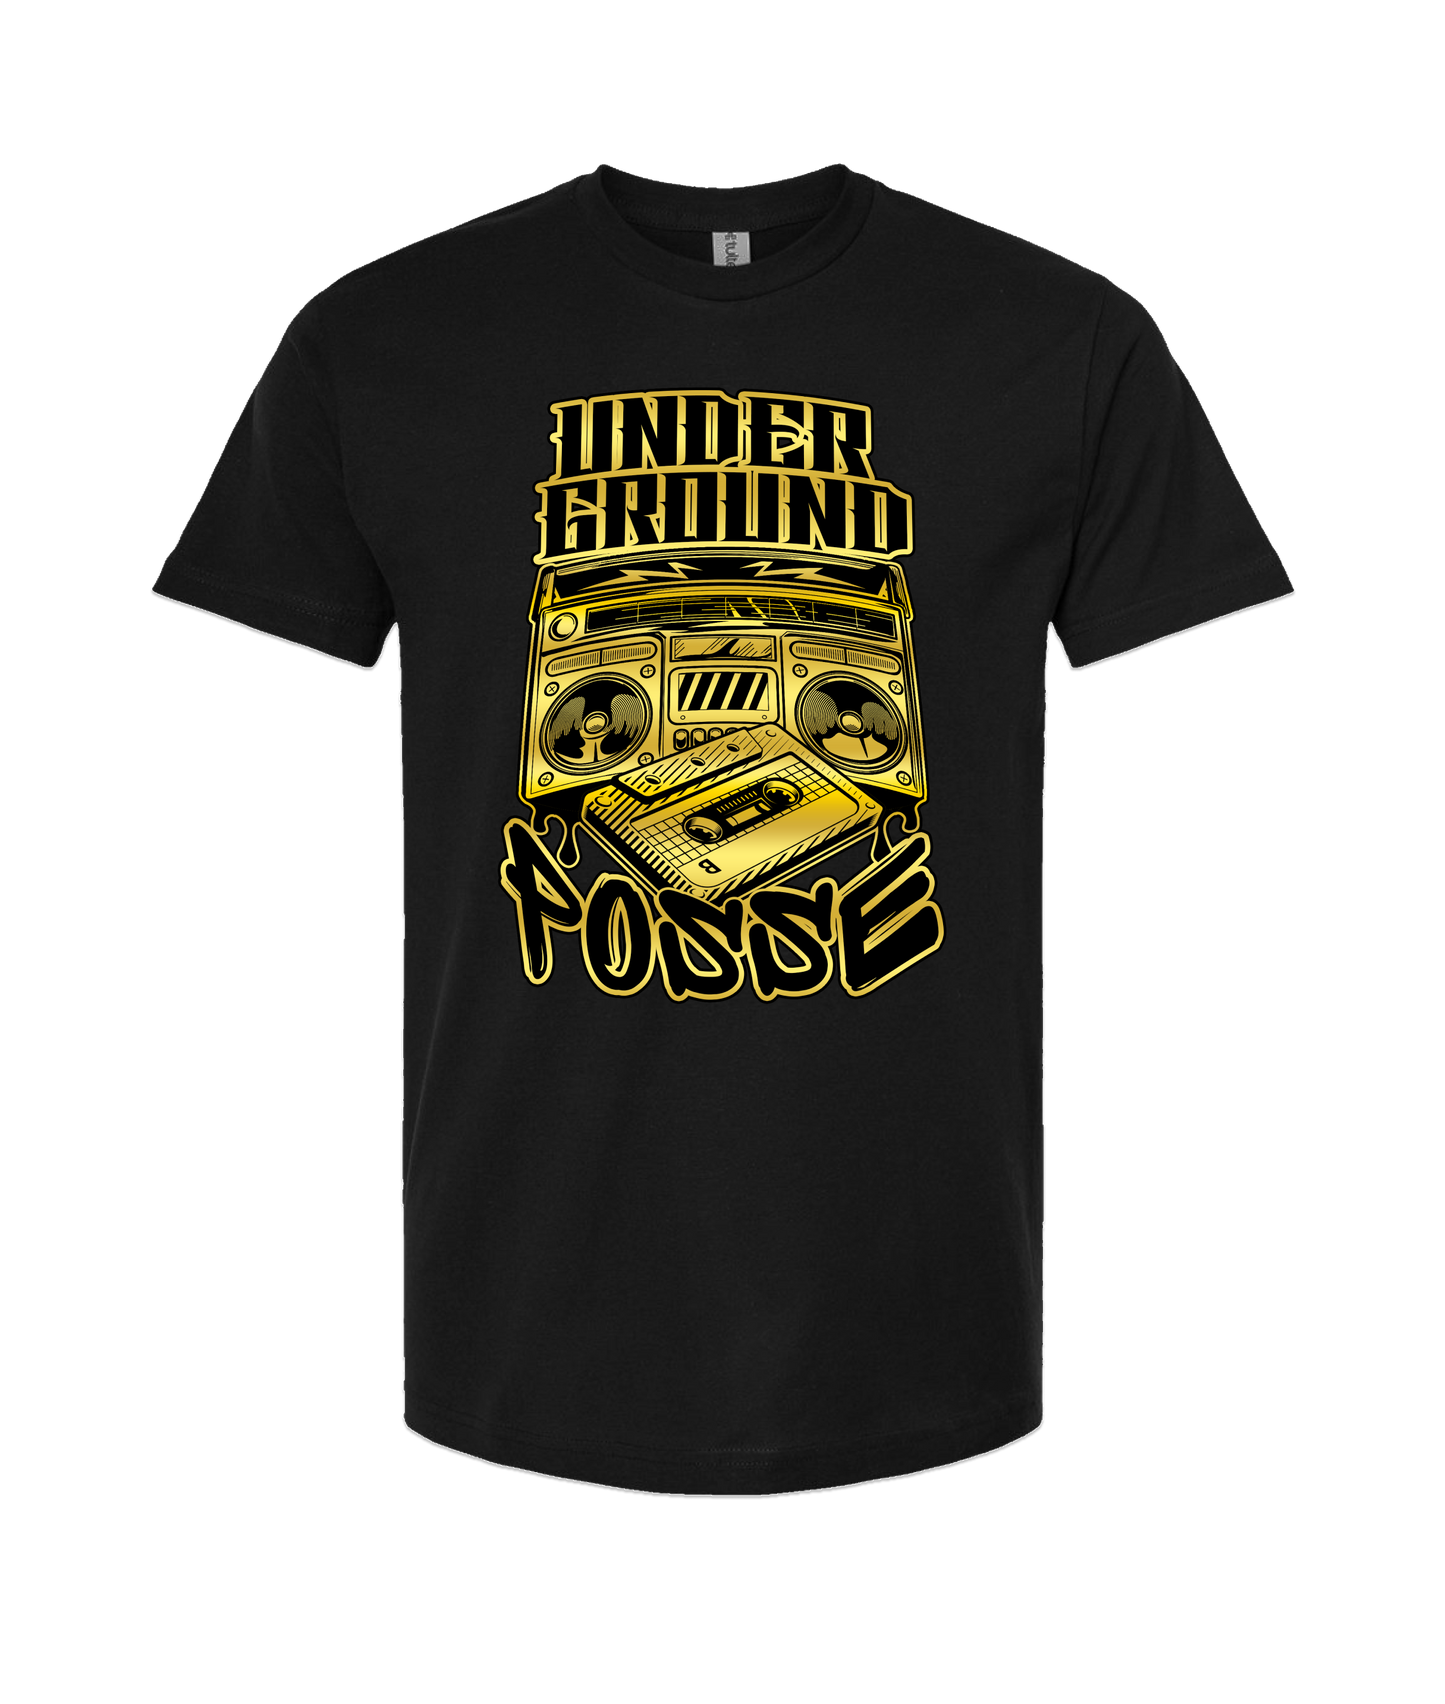 The Posse Store - UGP - Black T-Shirt